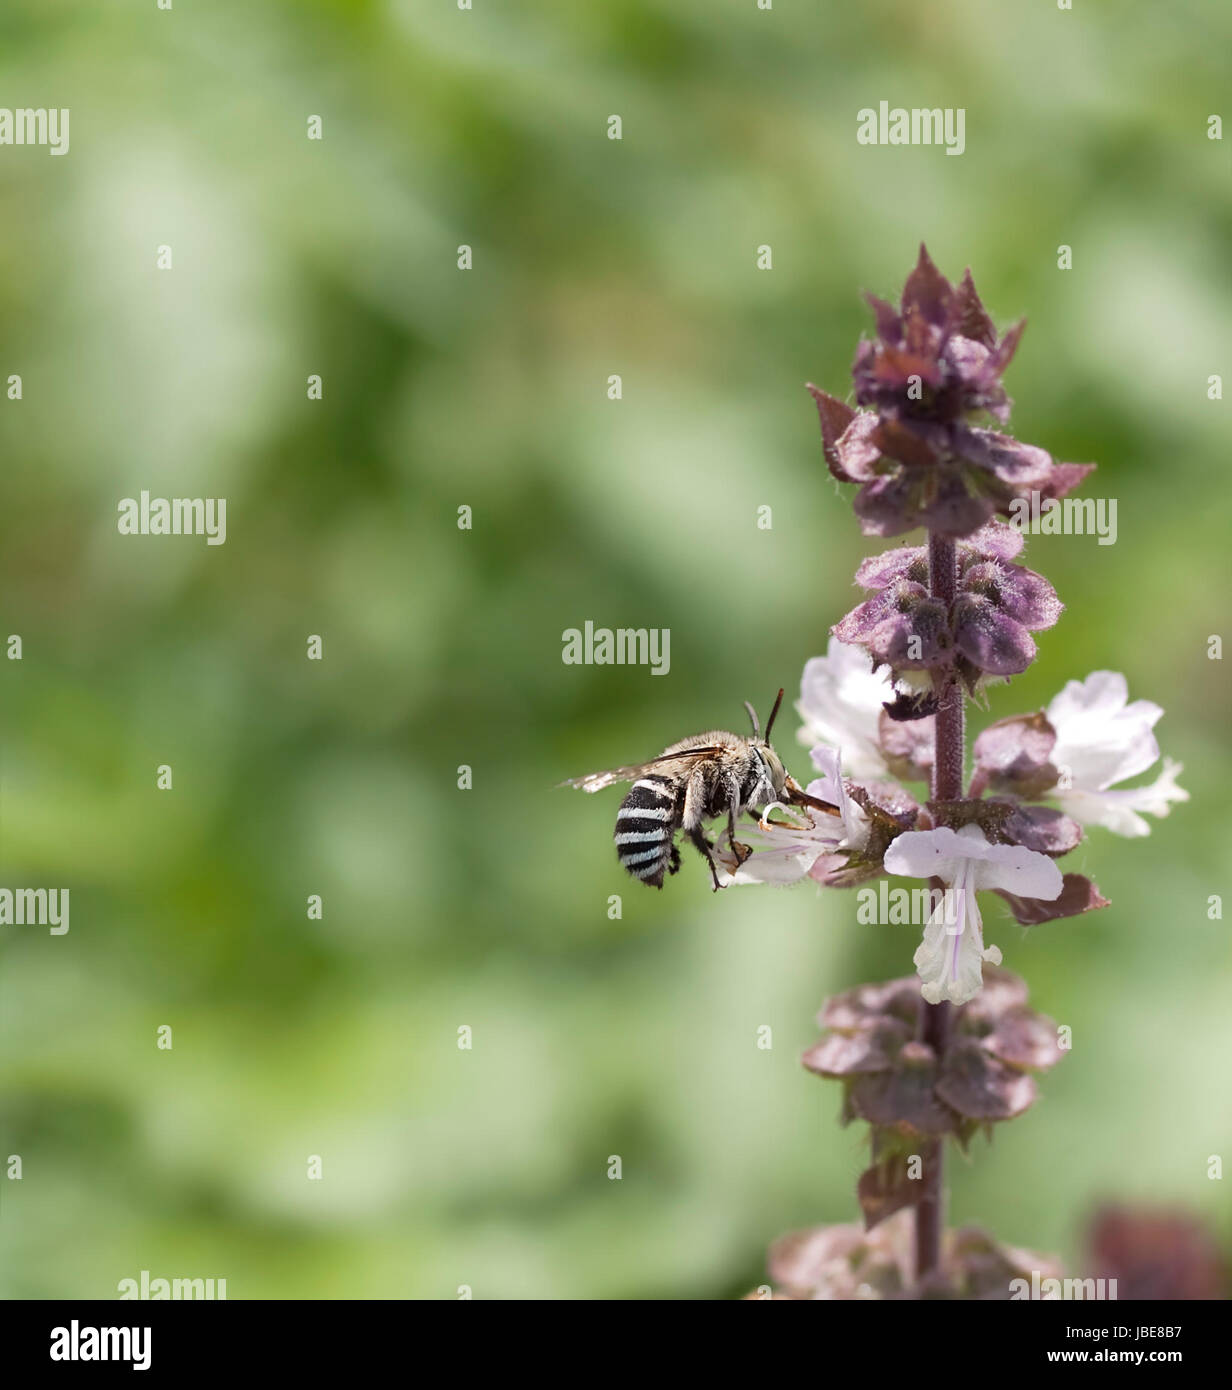 Striped banded Australian native bee Amagilla on a cinnamon basil flower extracting nectar with proboscis Stock Photo